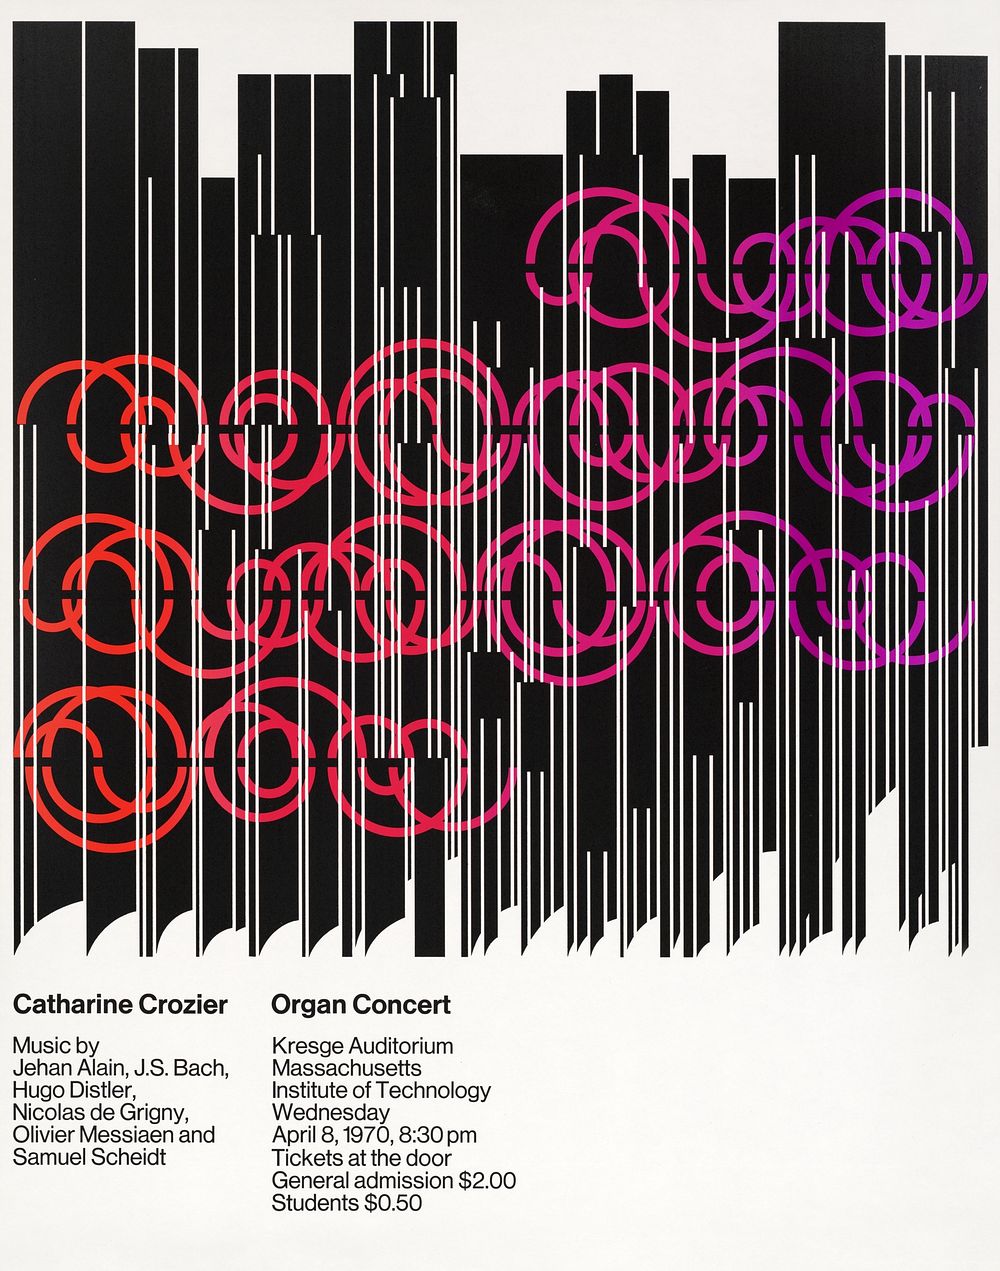 Catherine Crosier, organ concert (1970) vintage poster by Dietmar R. Winkler. Original public domain image from the Library…